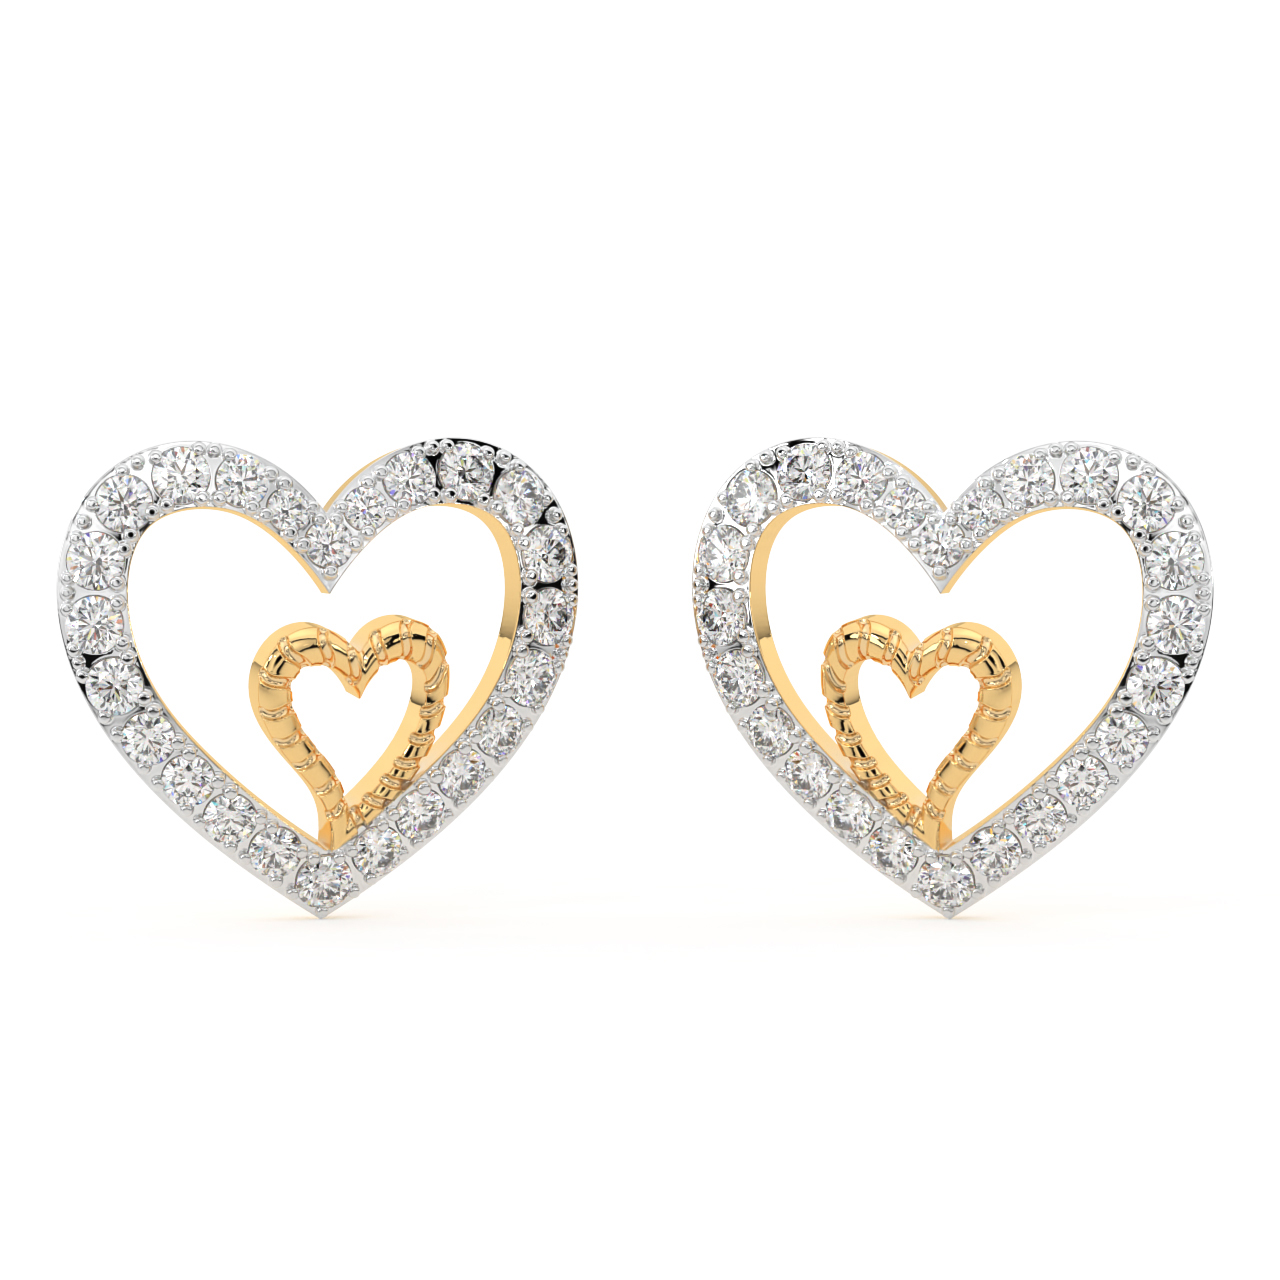 Heart Diamond Stud Earrings Cluster Design With Push Backs